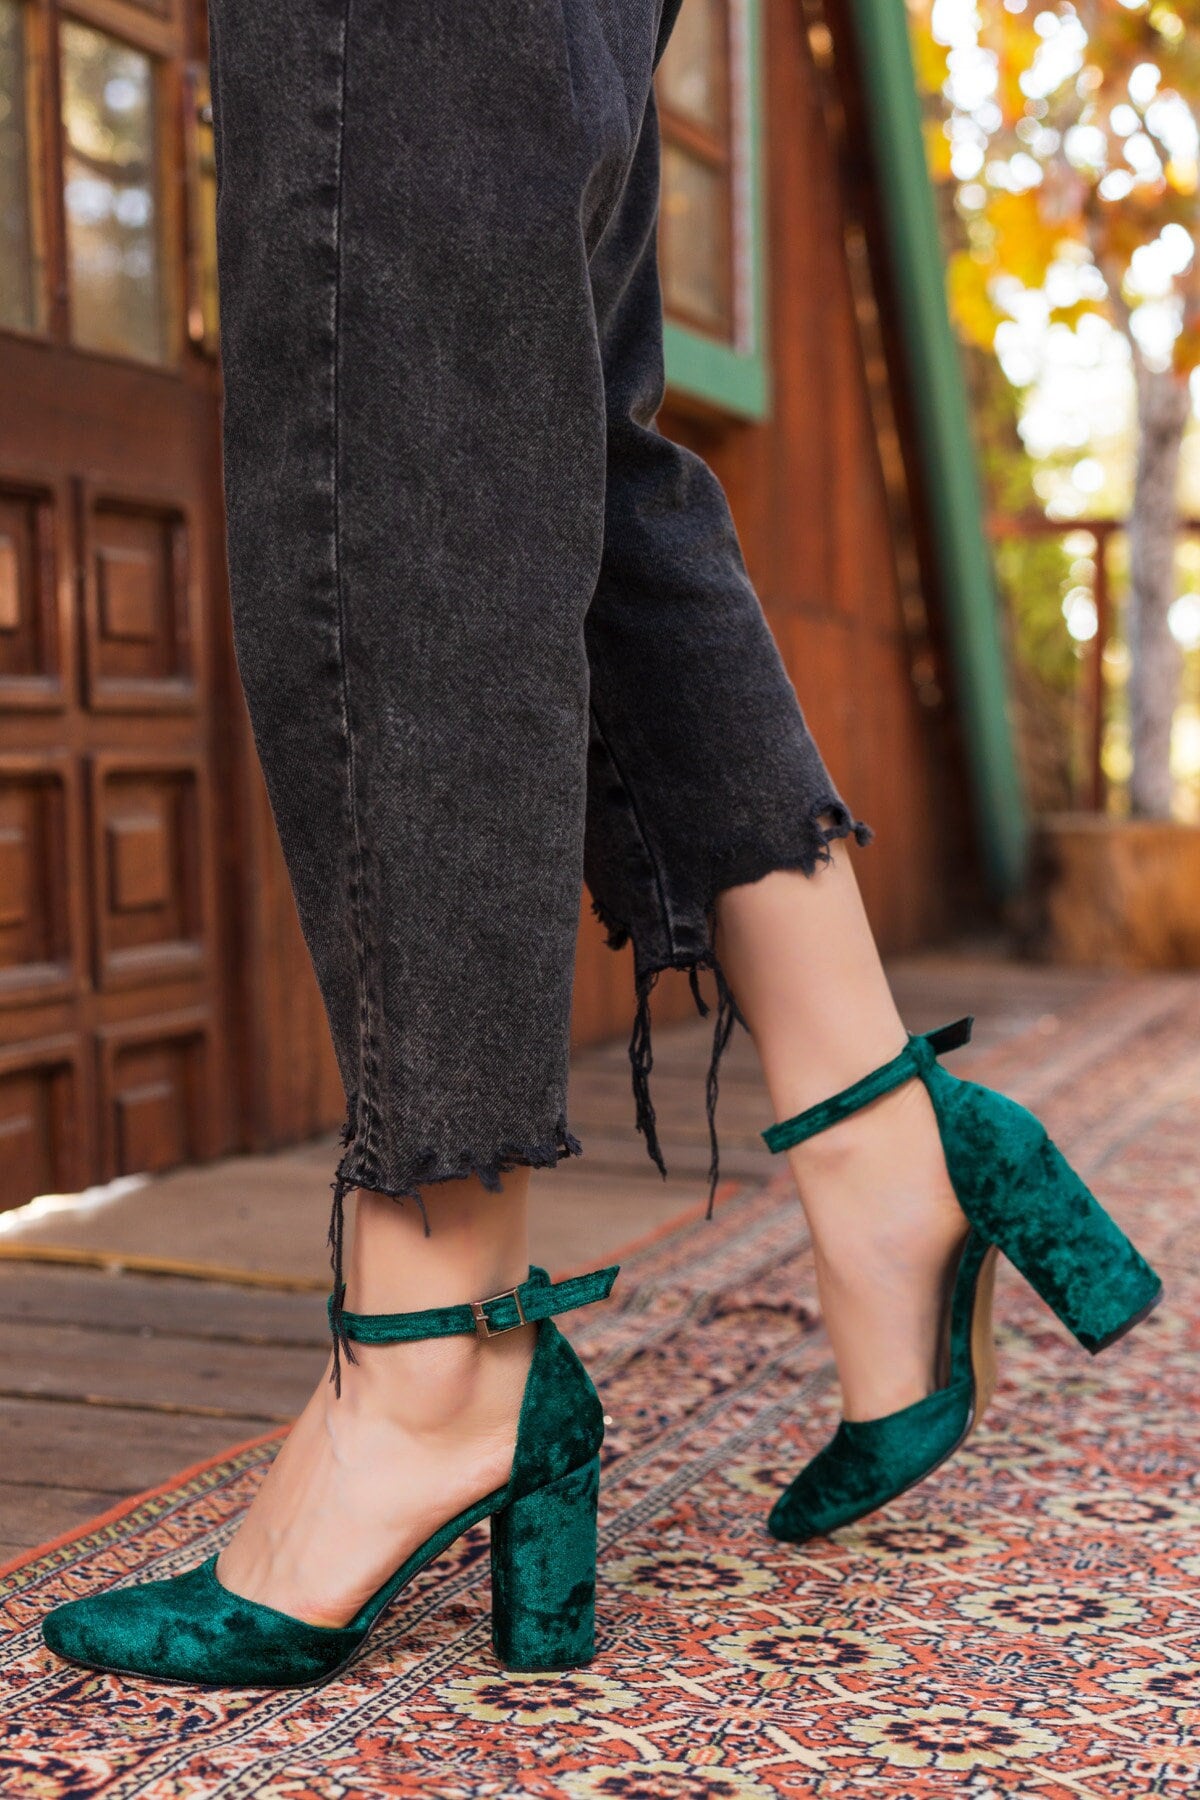 Buy Bonjour Ladies Synthetic Dark Green Heels at Amazon.in